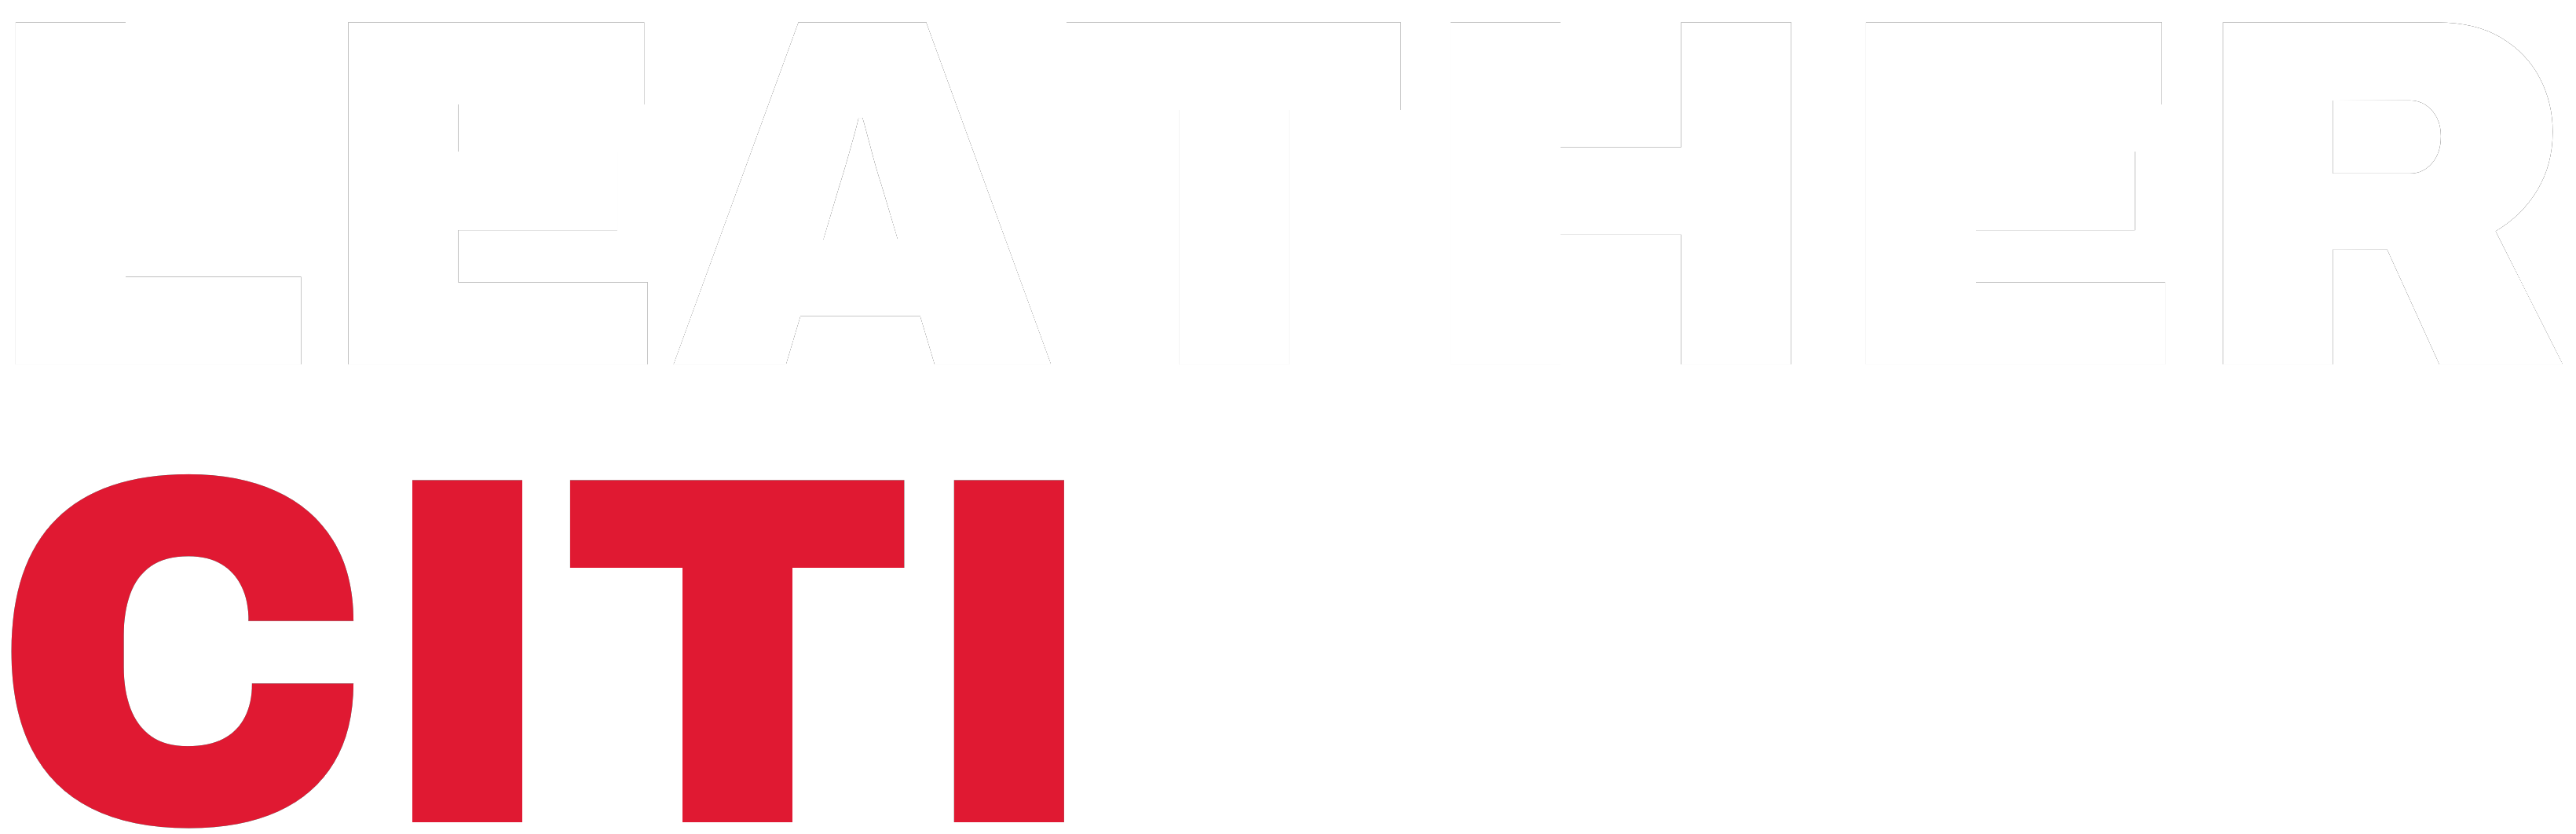 Leather Citi logo